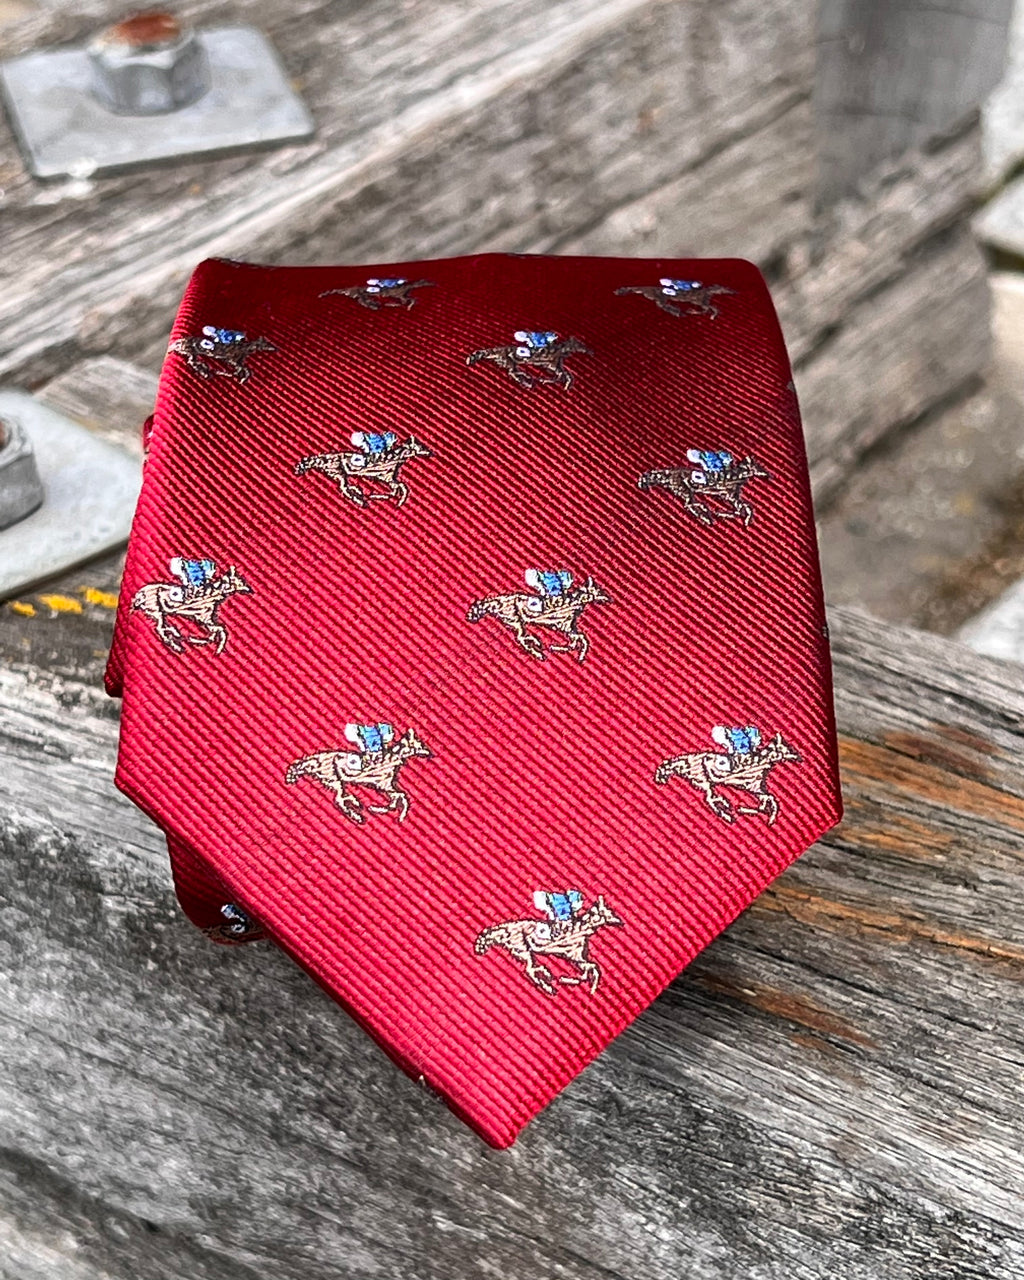 Pure silk tie featuring racehorse motif on dark red background